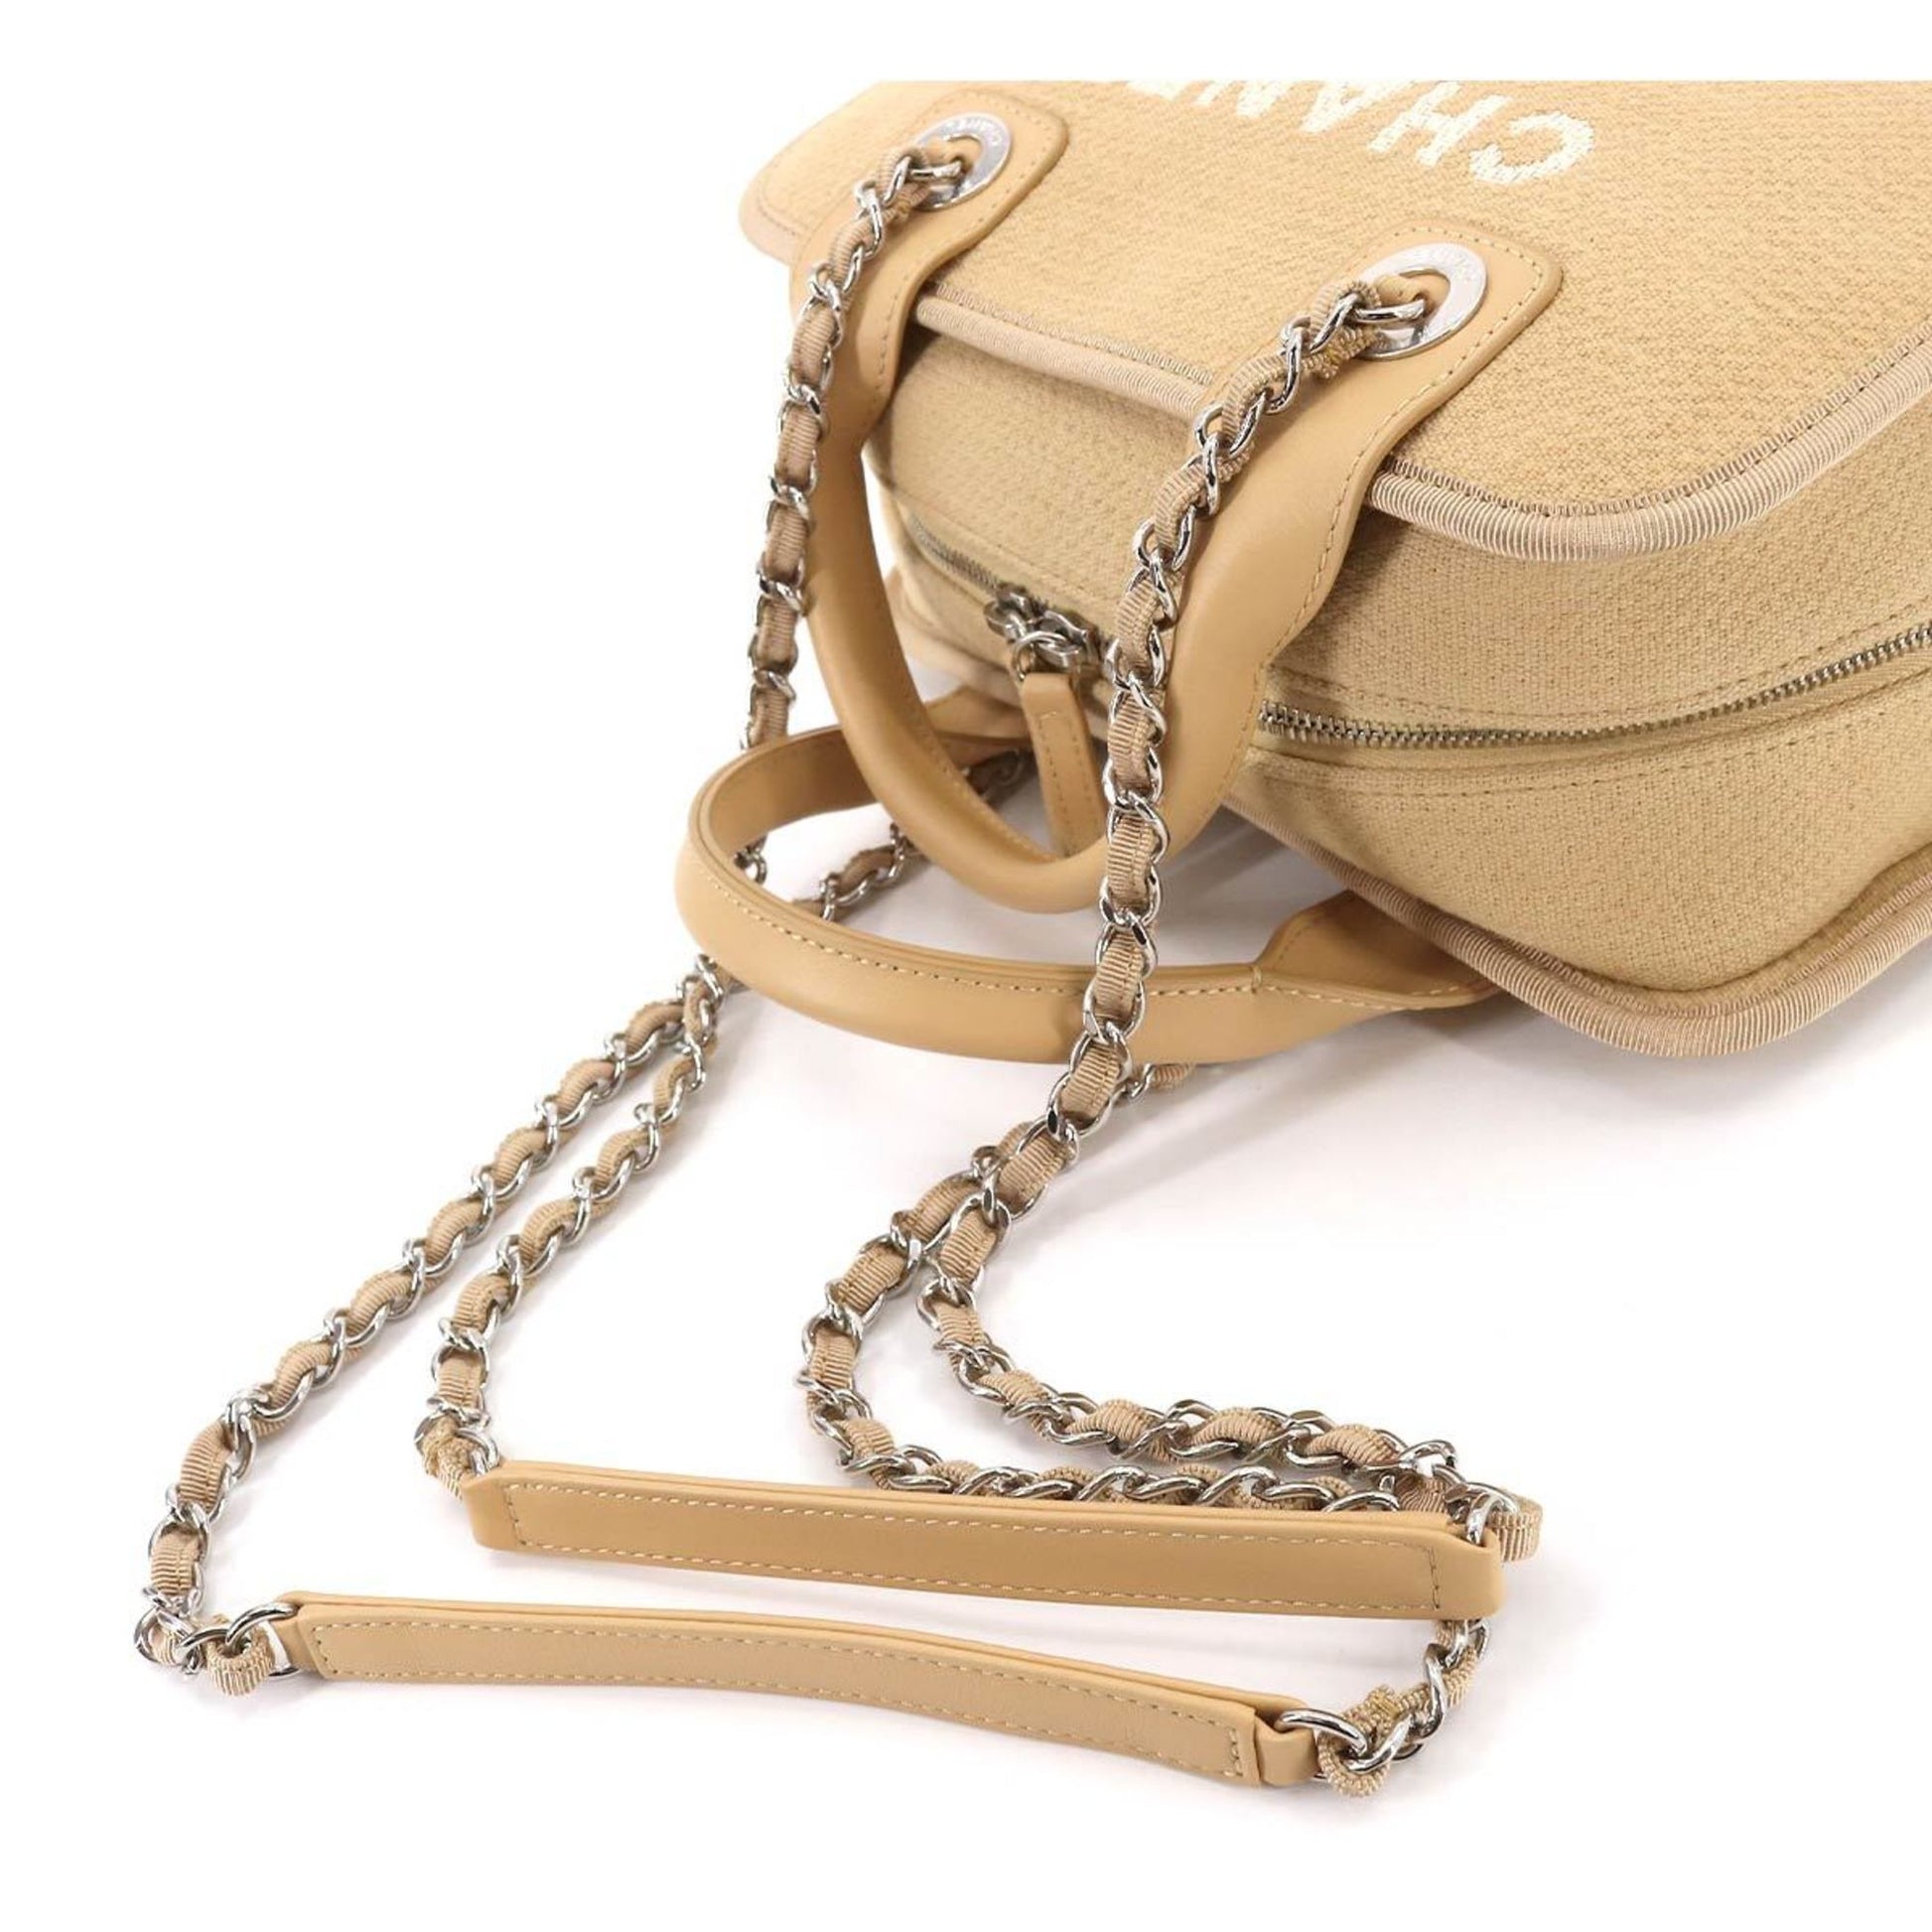 Chanel Deauville Chain Handbag Beige A92749 Canvas Leather